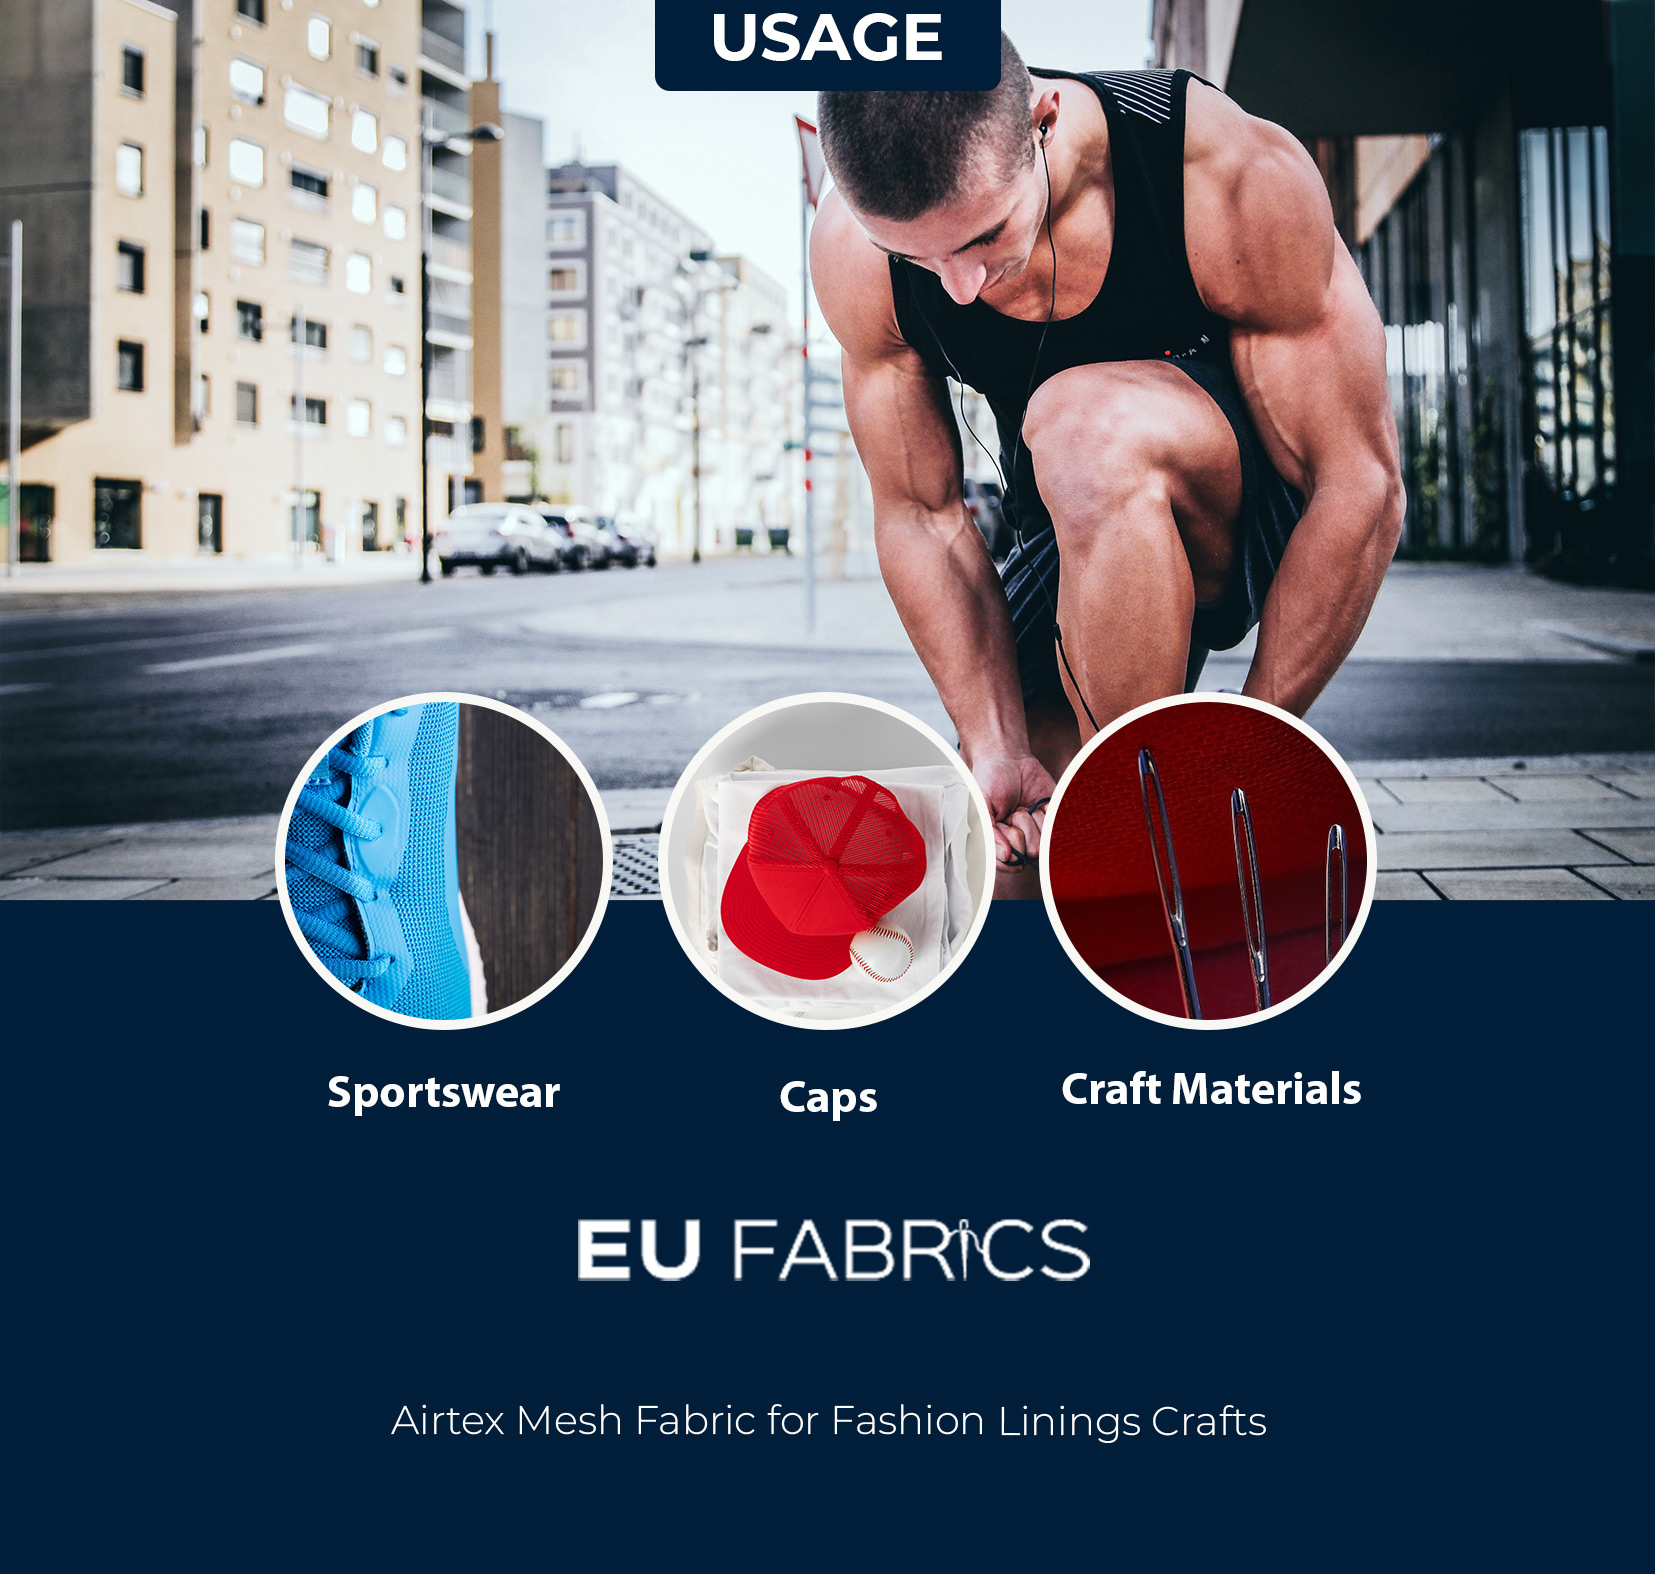 Airtex Mesh Fabric for Fashion Linings Crafts Usage